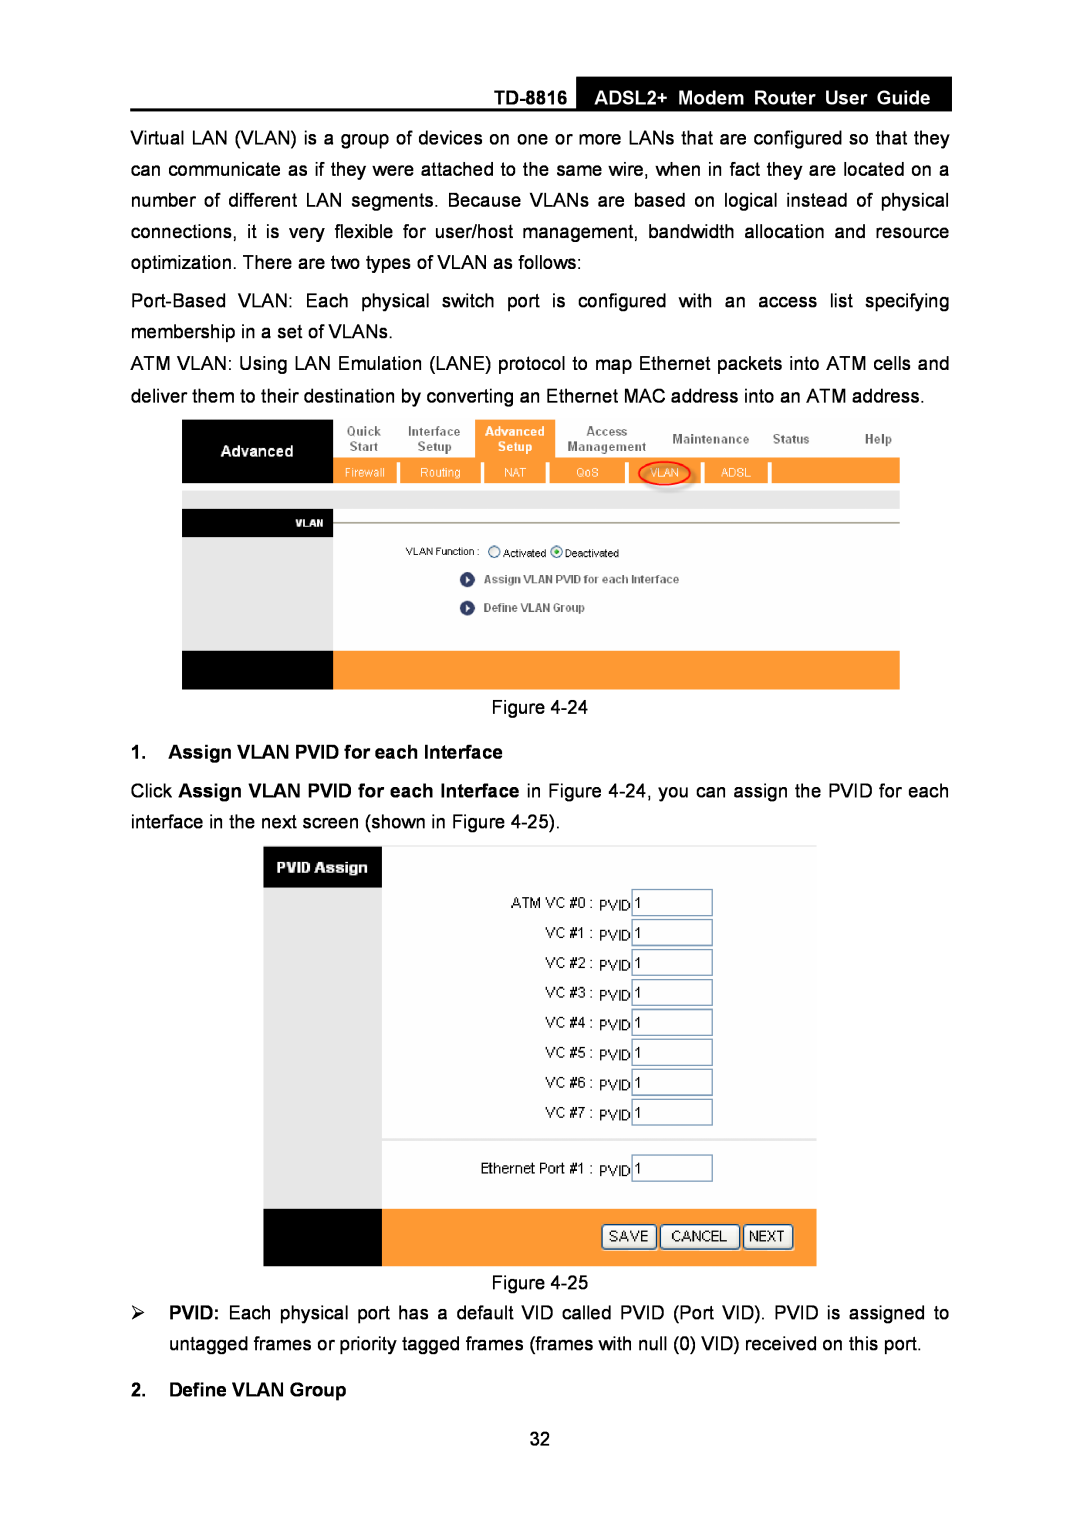 TP-Link TD-8816 manual ADSL2+ Modem Router User Guide, Assign VLAN PVID for each Interface, Define VLAN Group 